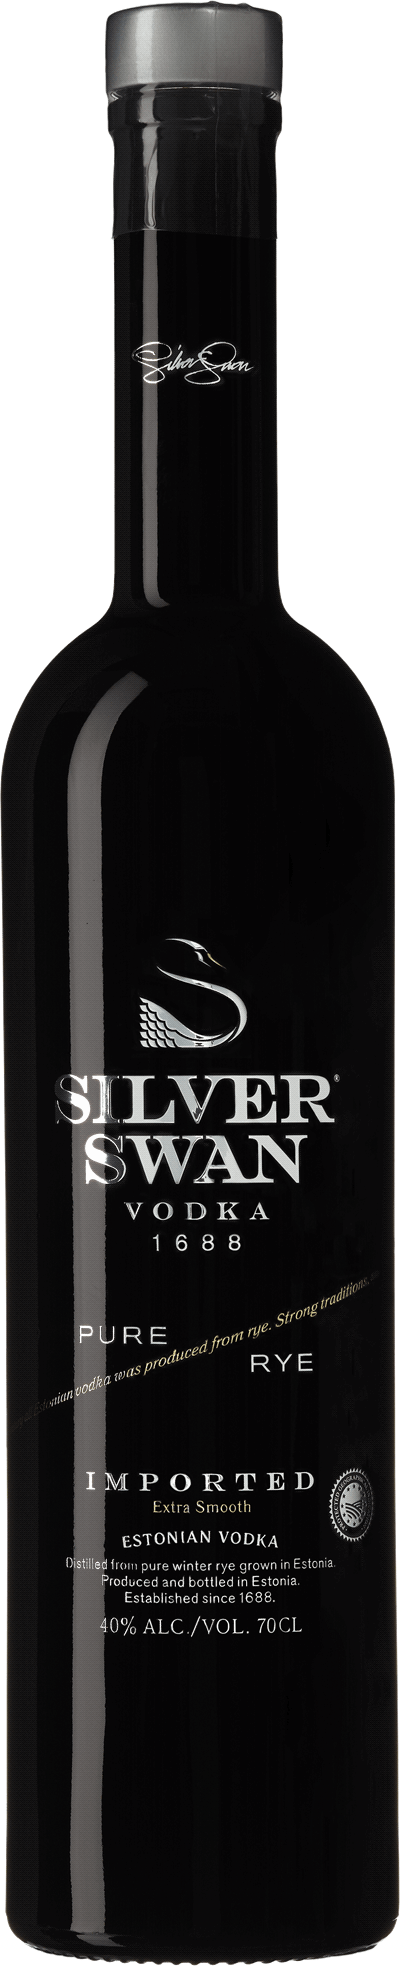 Silver Swan Pure Rye Vodka